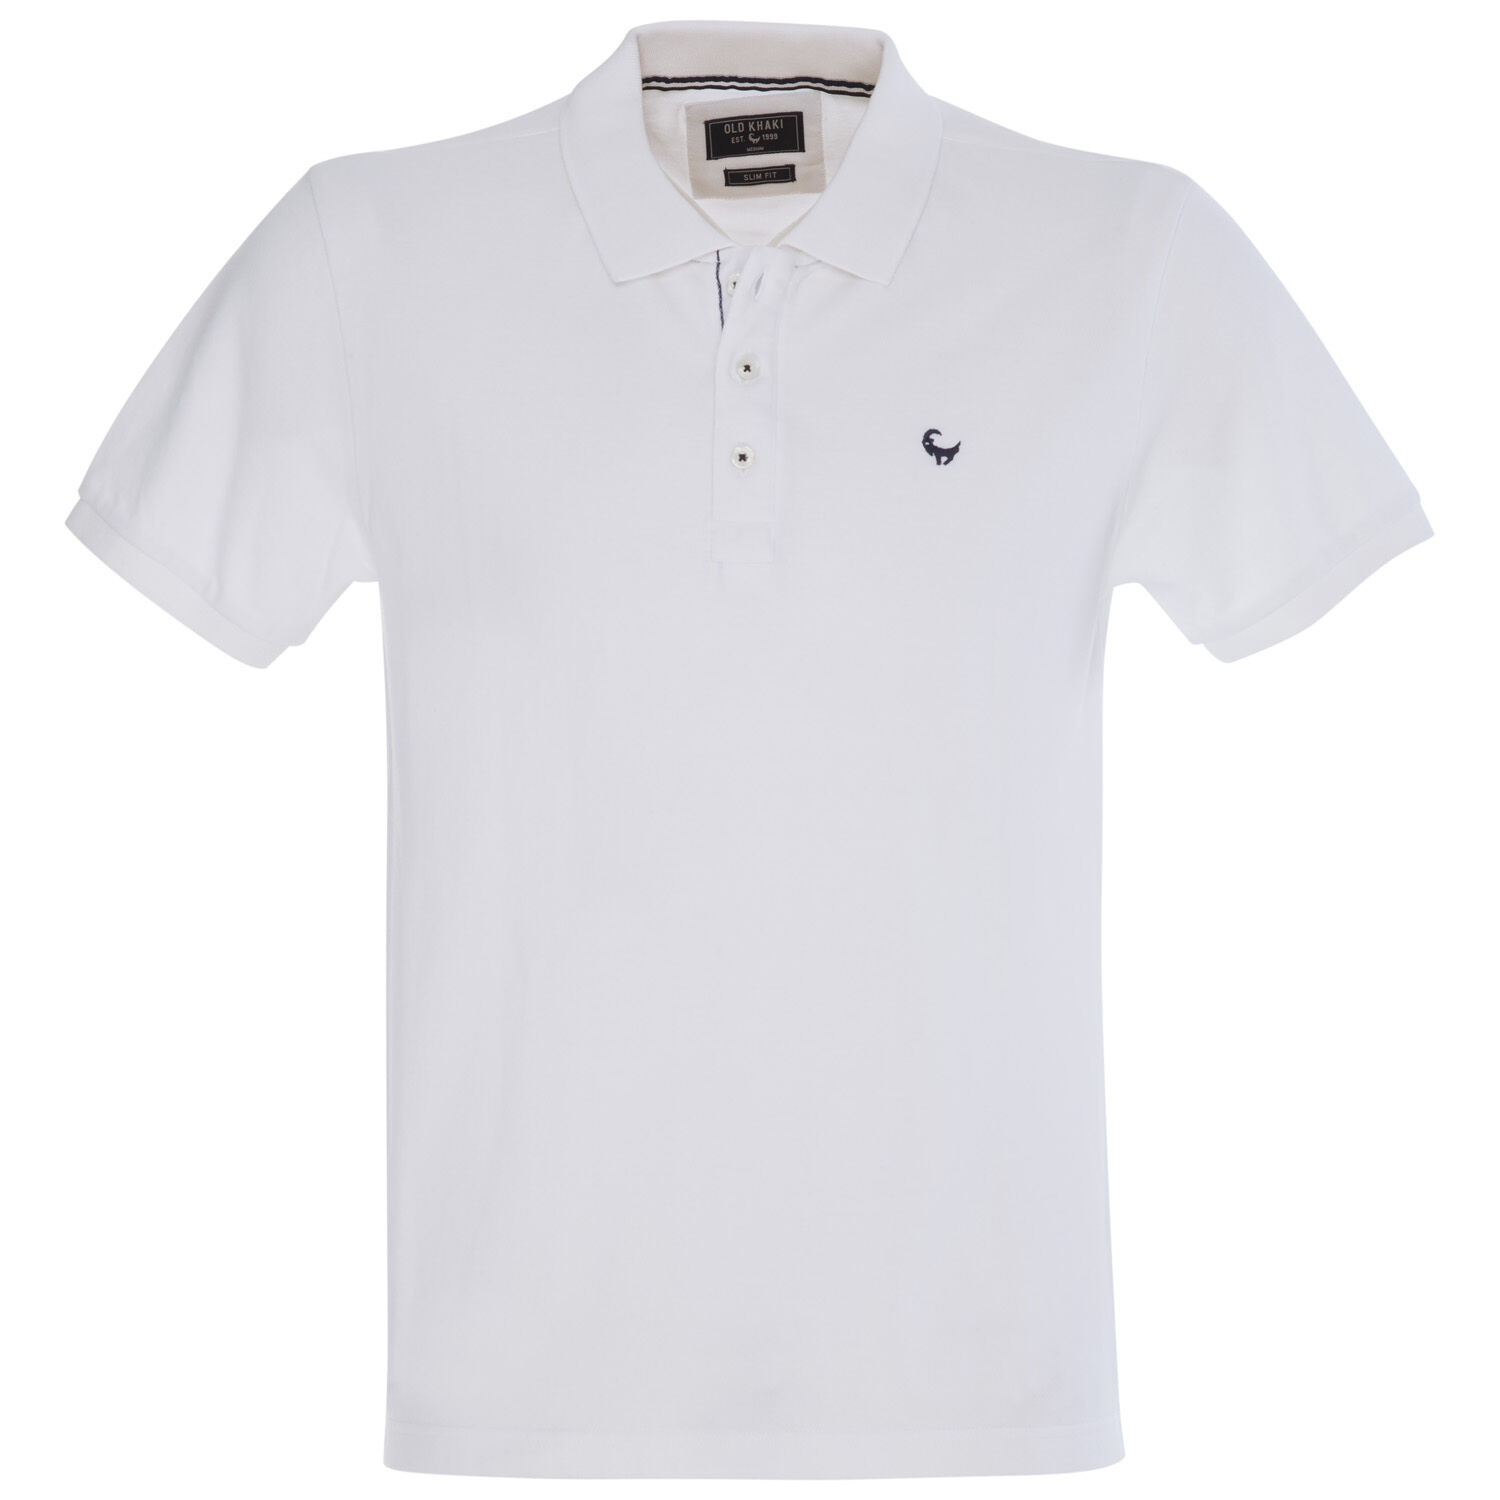 timberland golf t shirt price